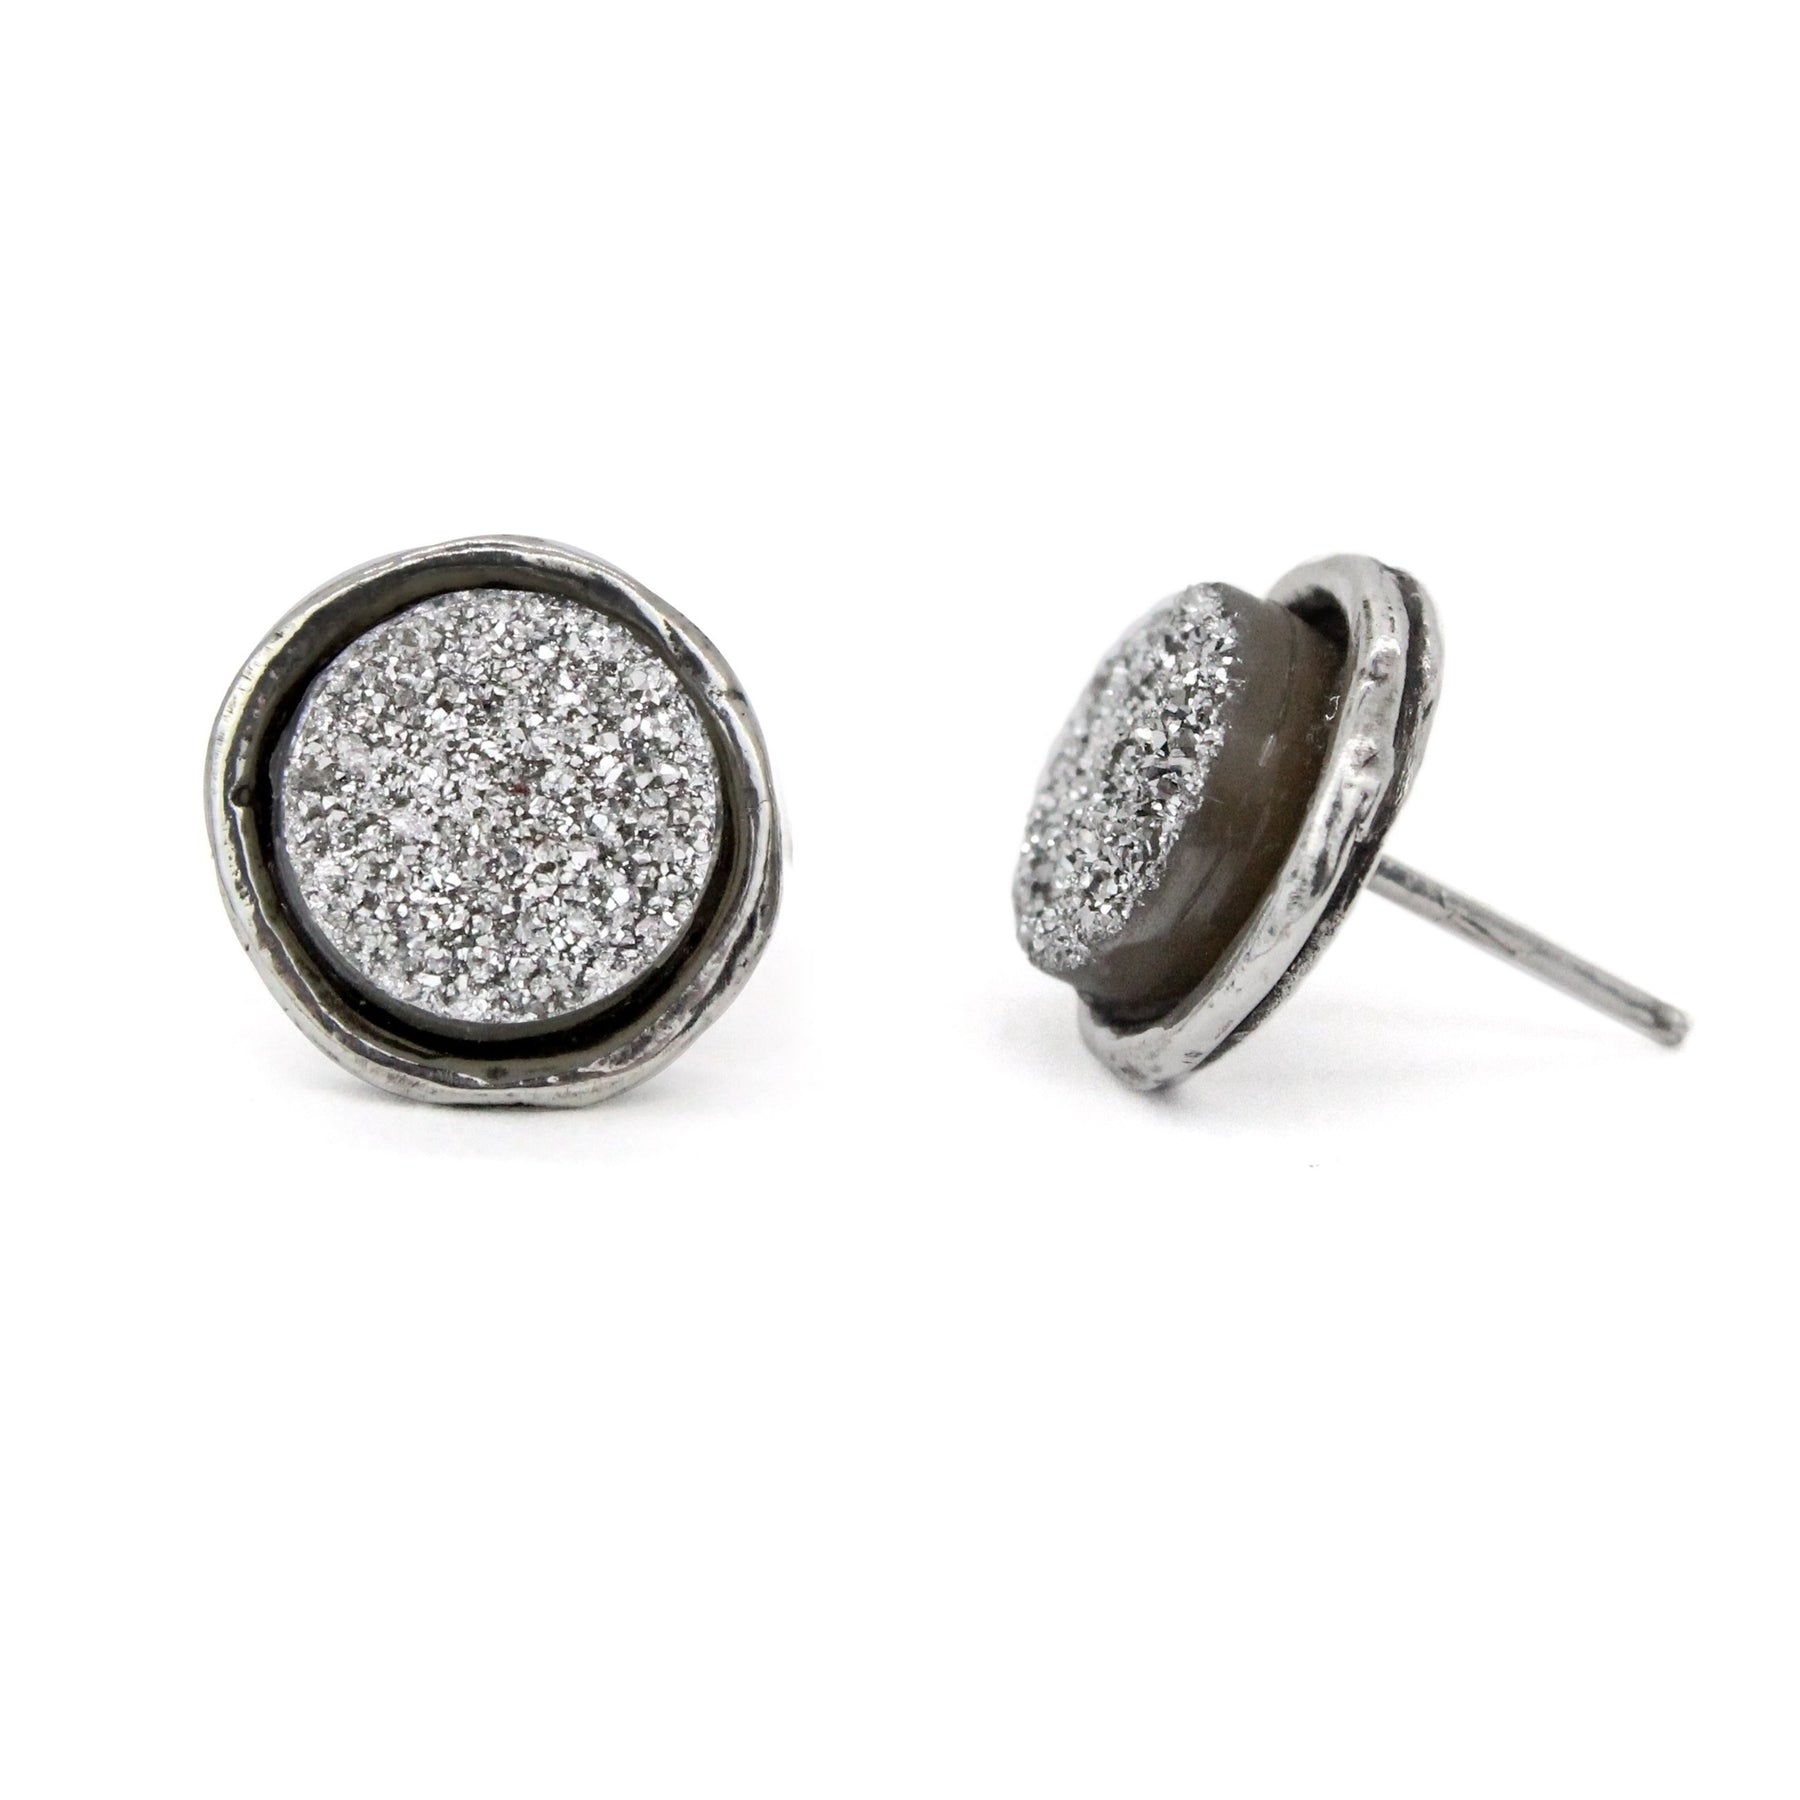 Glimmer Earrings - Susan Rodgers Designs